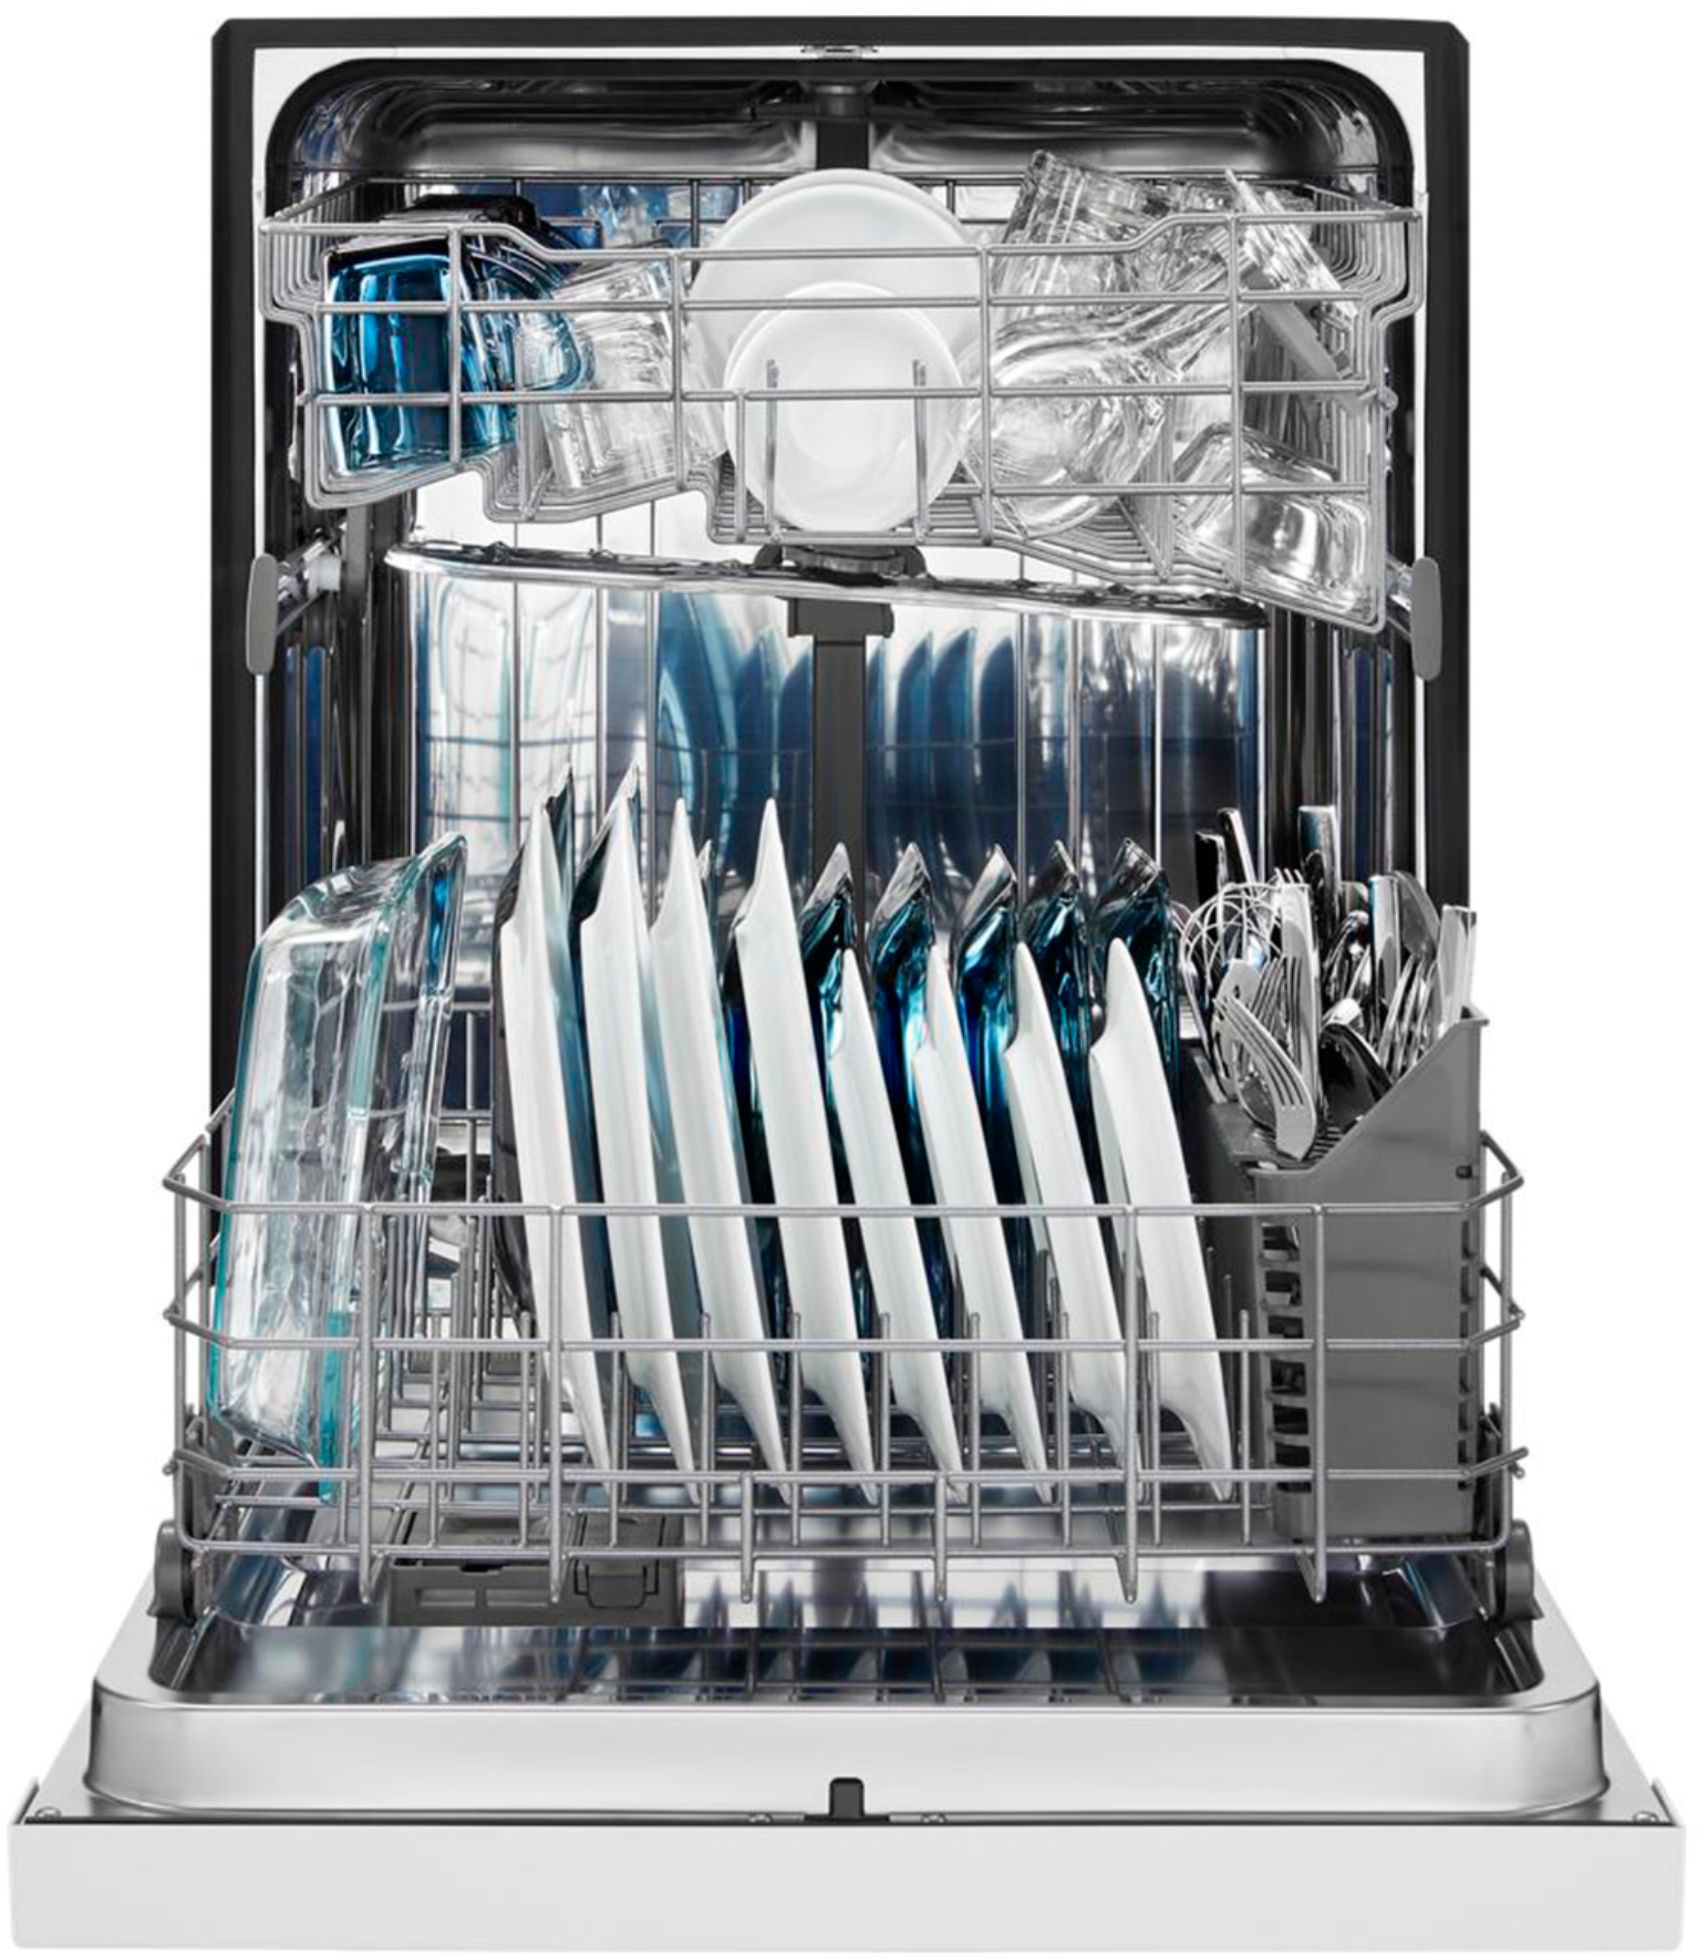 maytag front control dishwasher